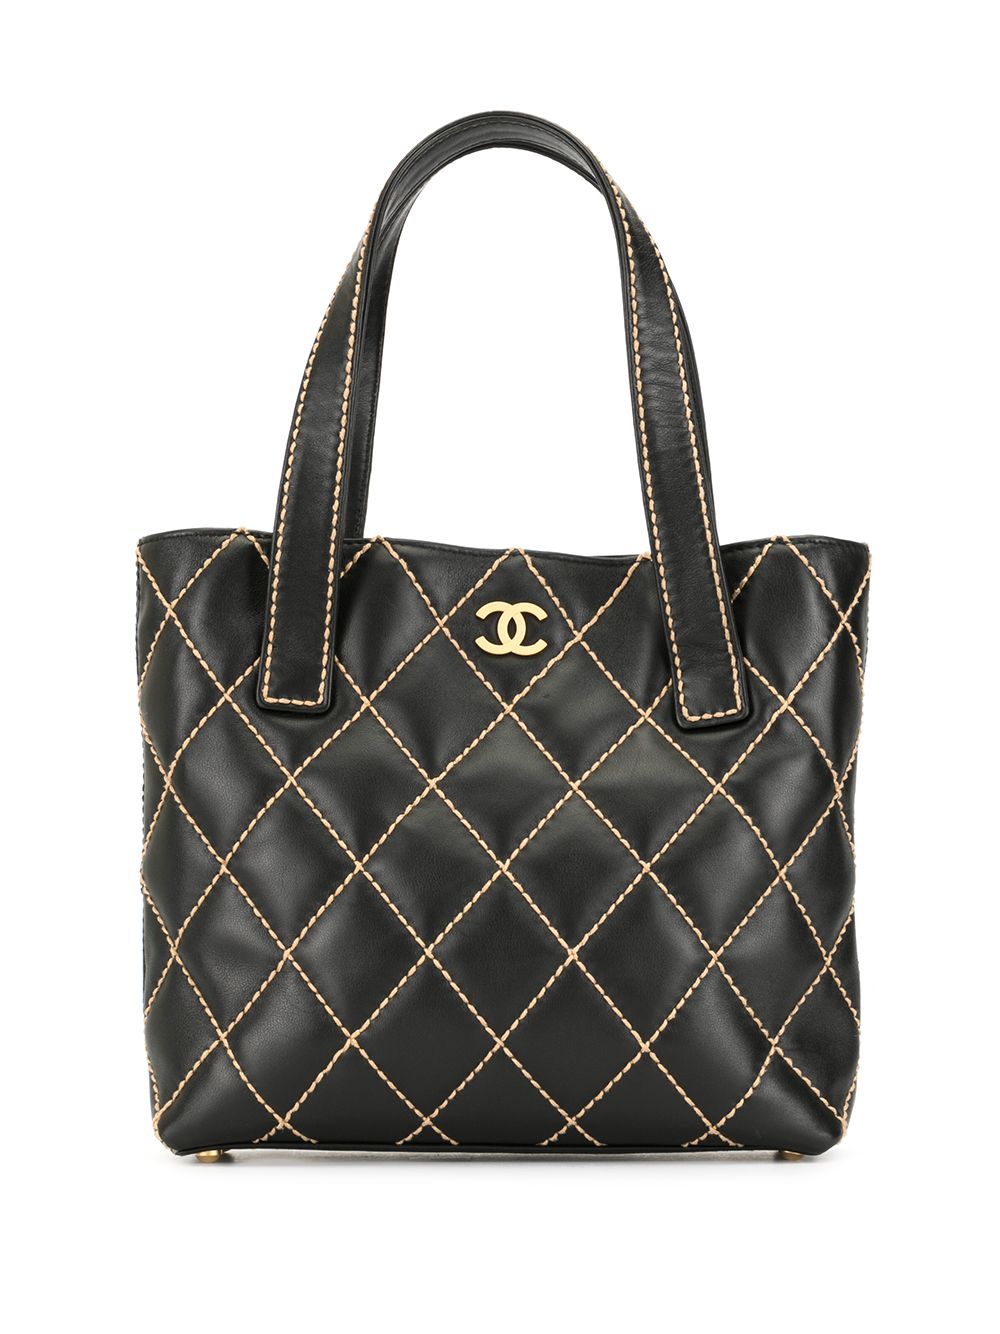 фото Chanel pre-owned сумка-тоут wild stitch с логотипом cc